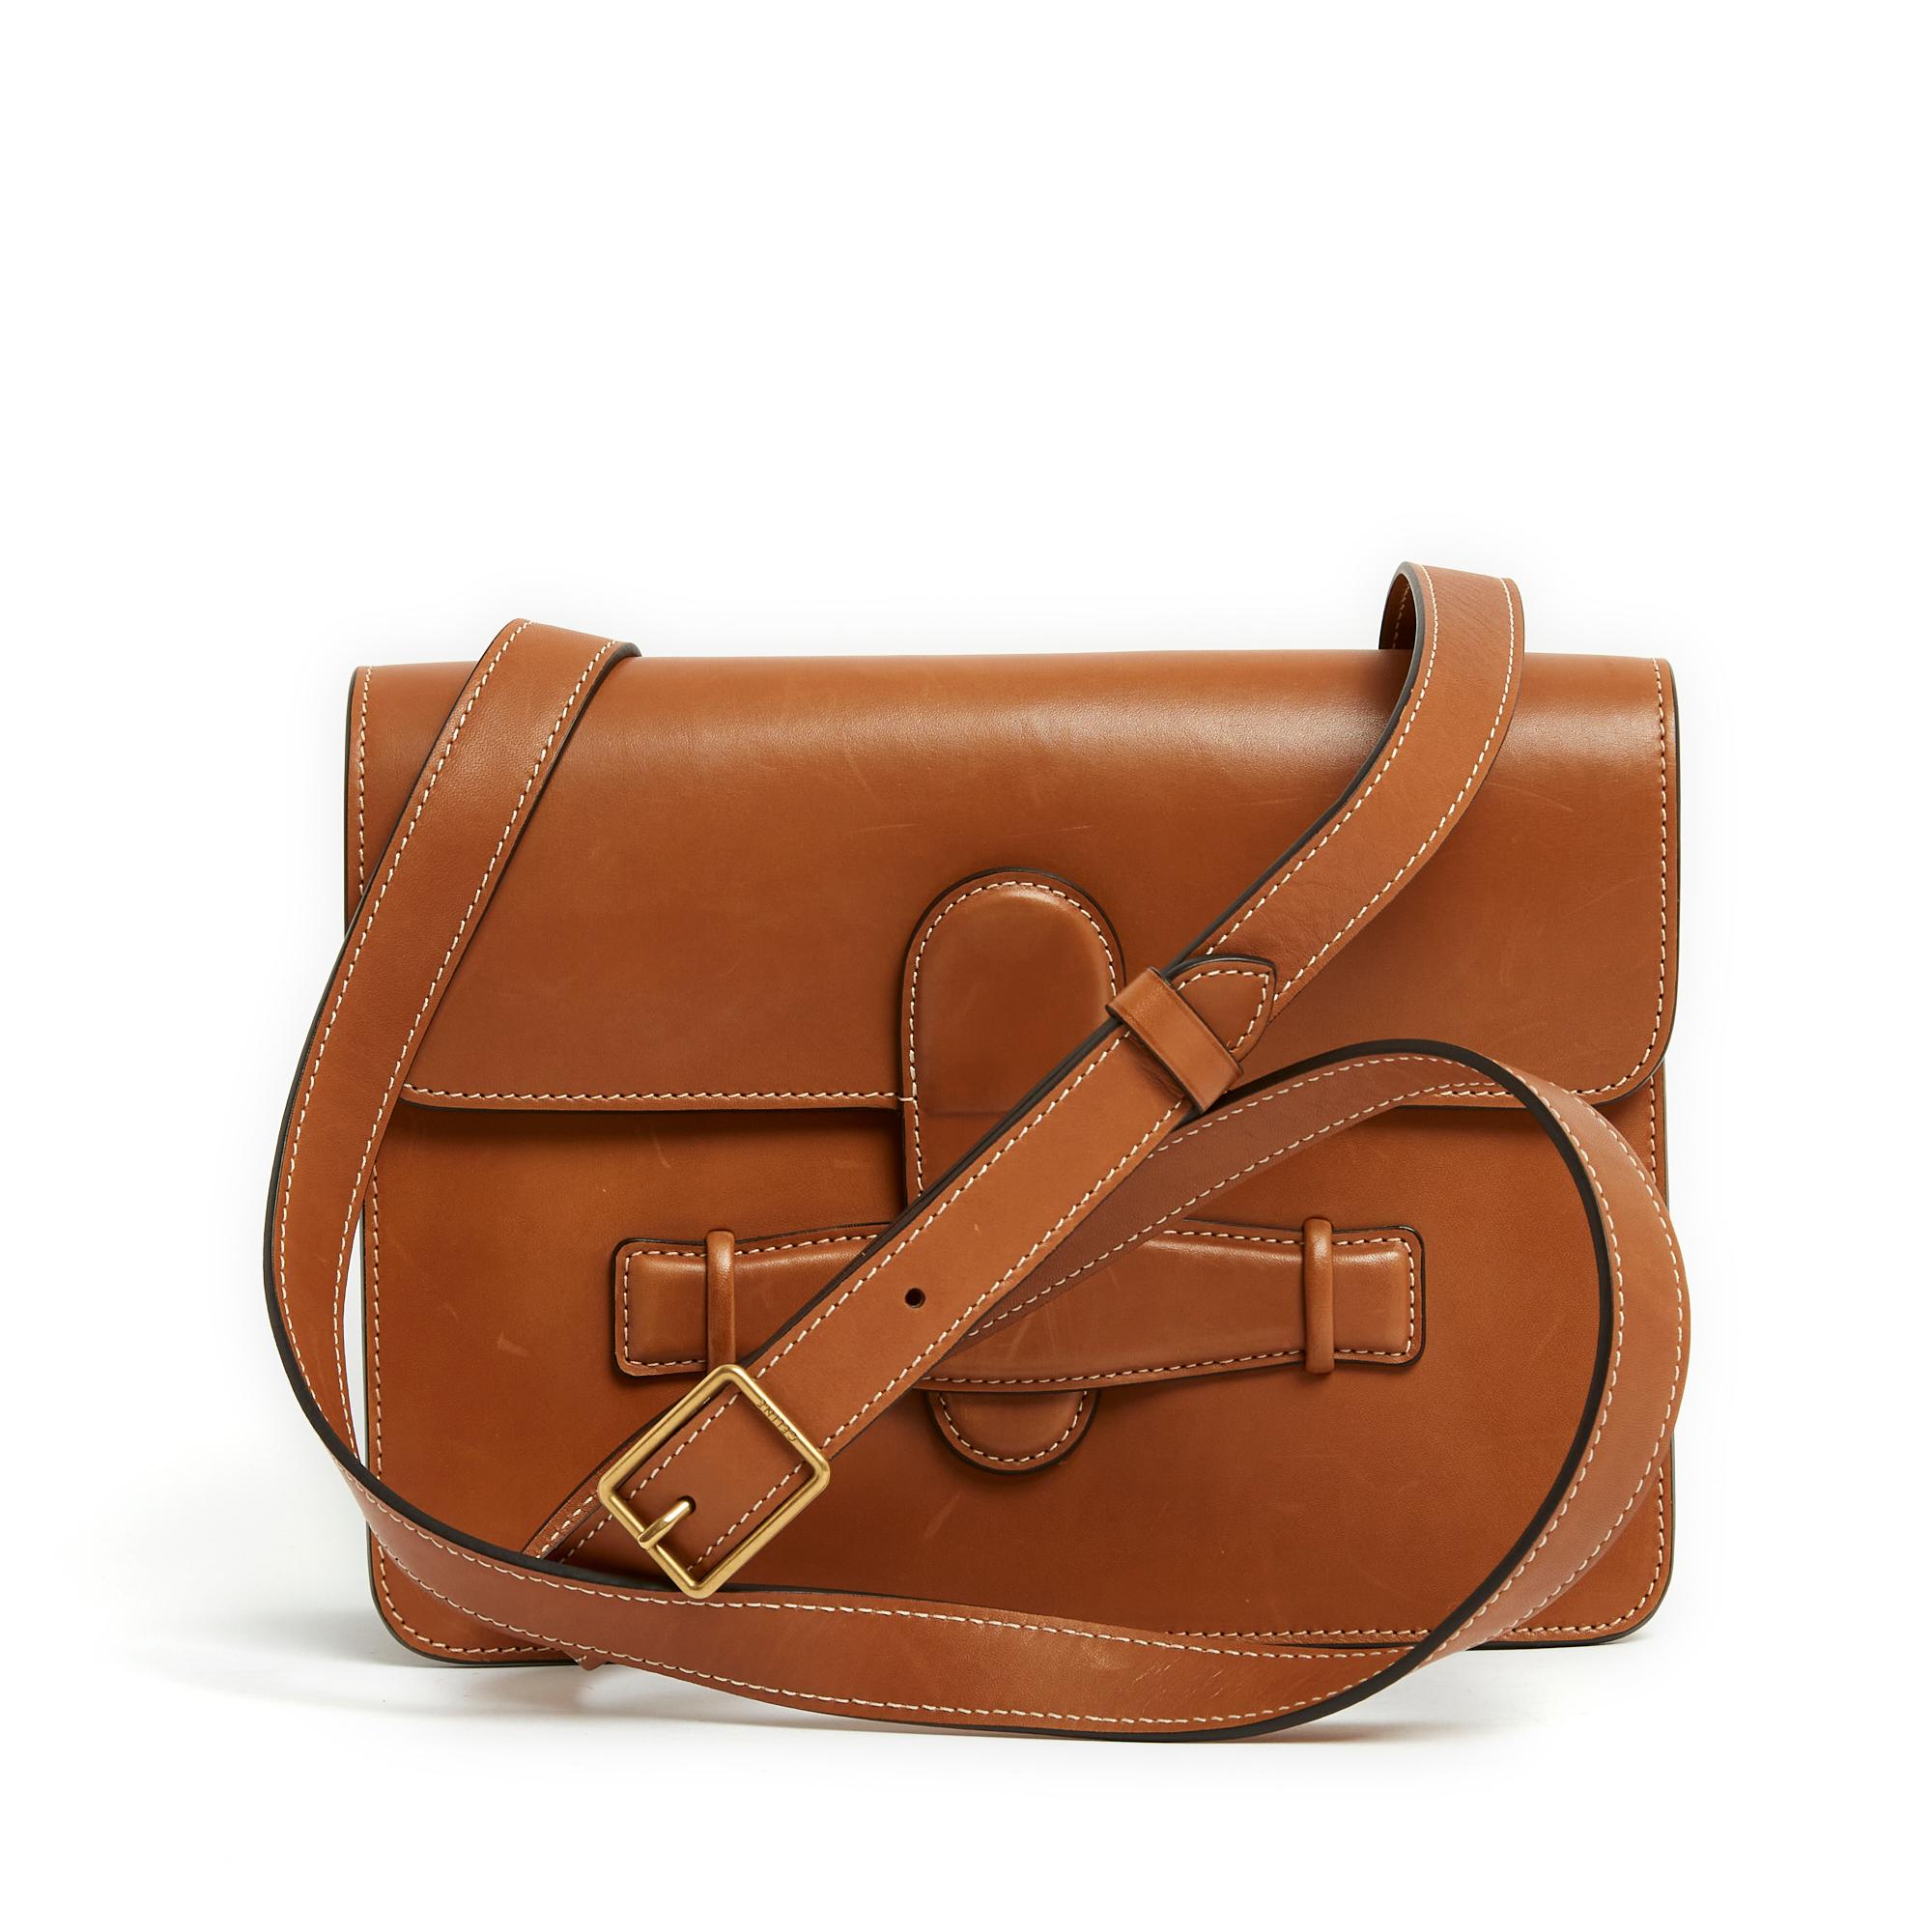 Brown 2018 Phoebe Philo Celine Symmetrical Bag natural leather For Sale